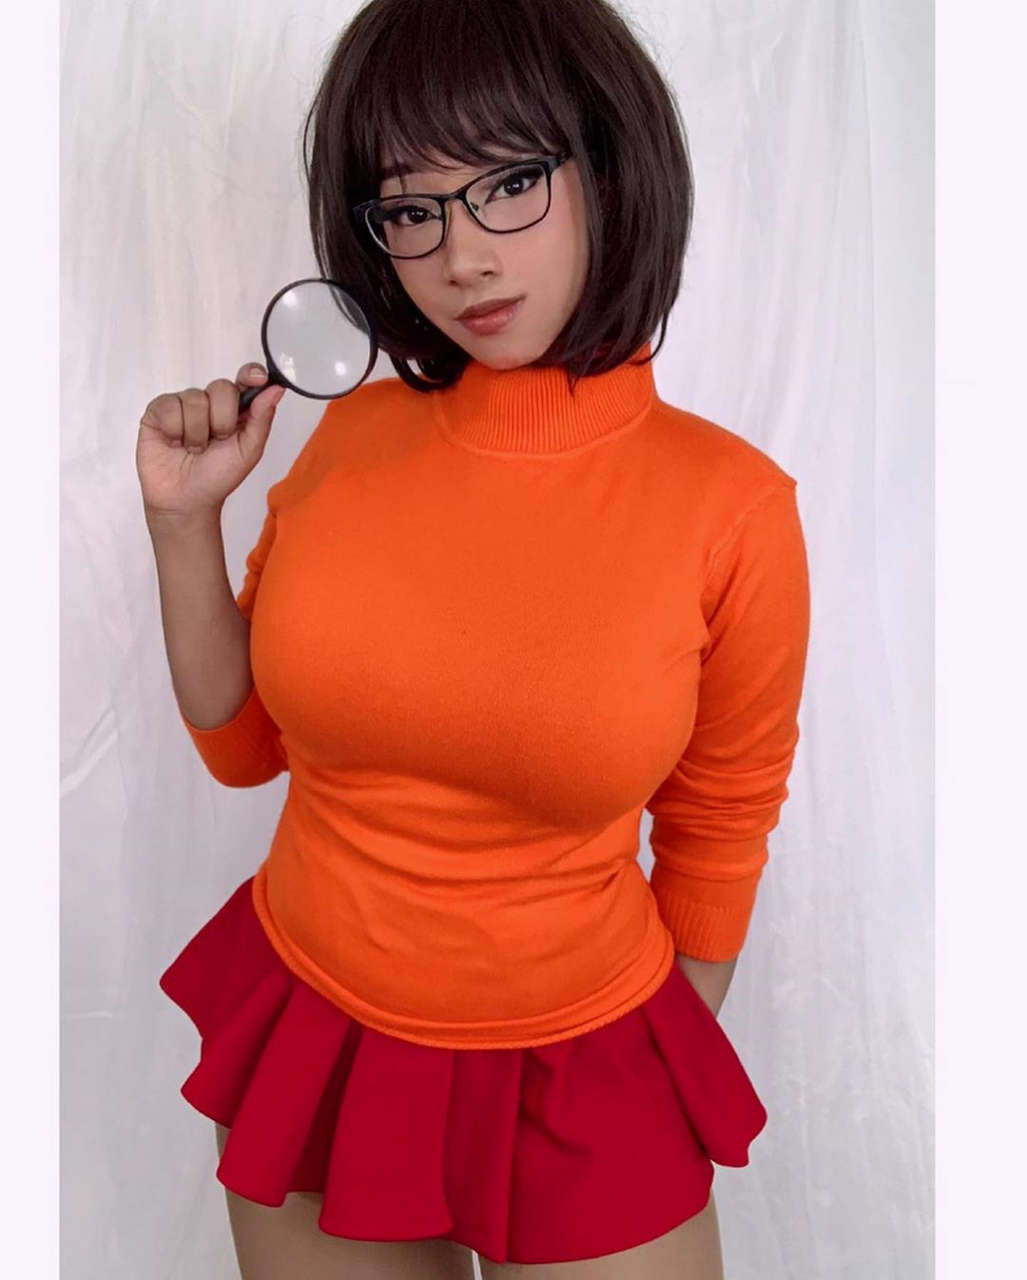 Uniquesora As Velma Dinkle